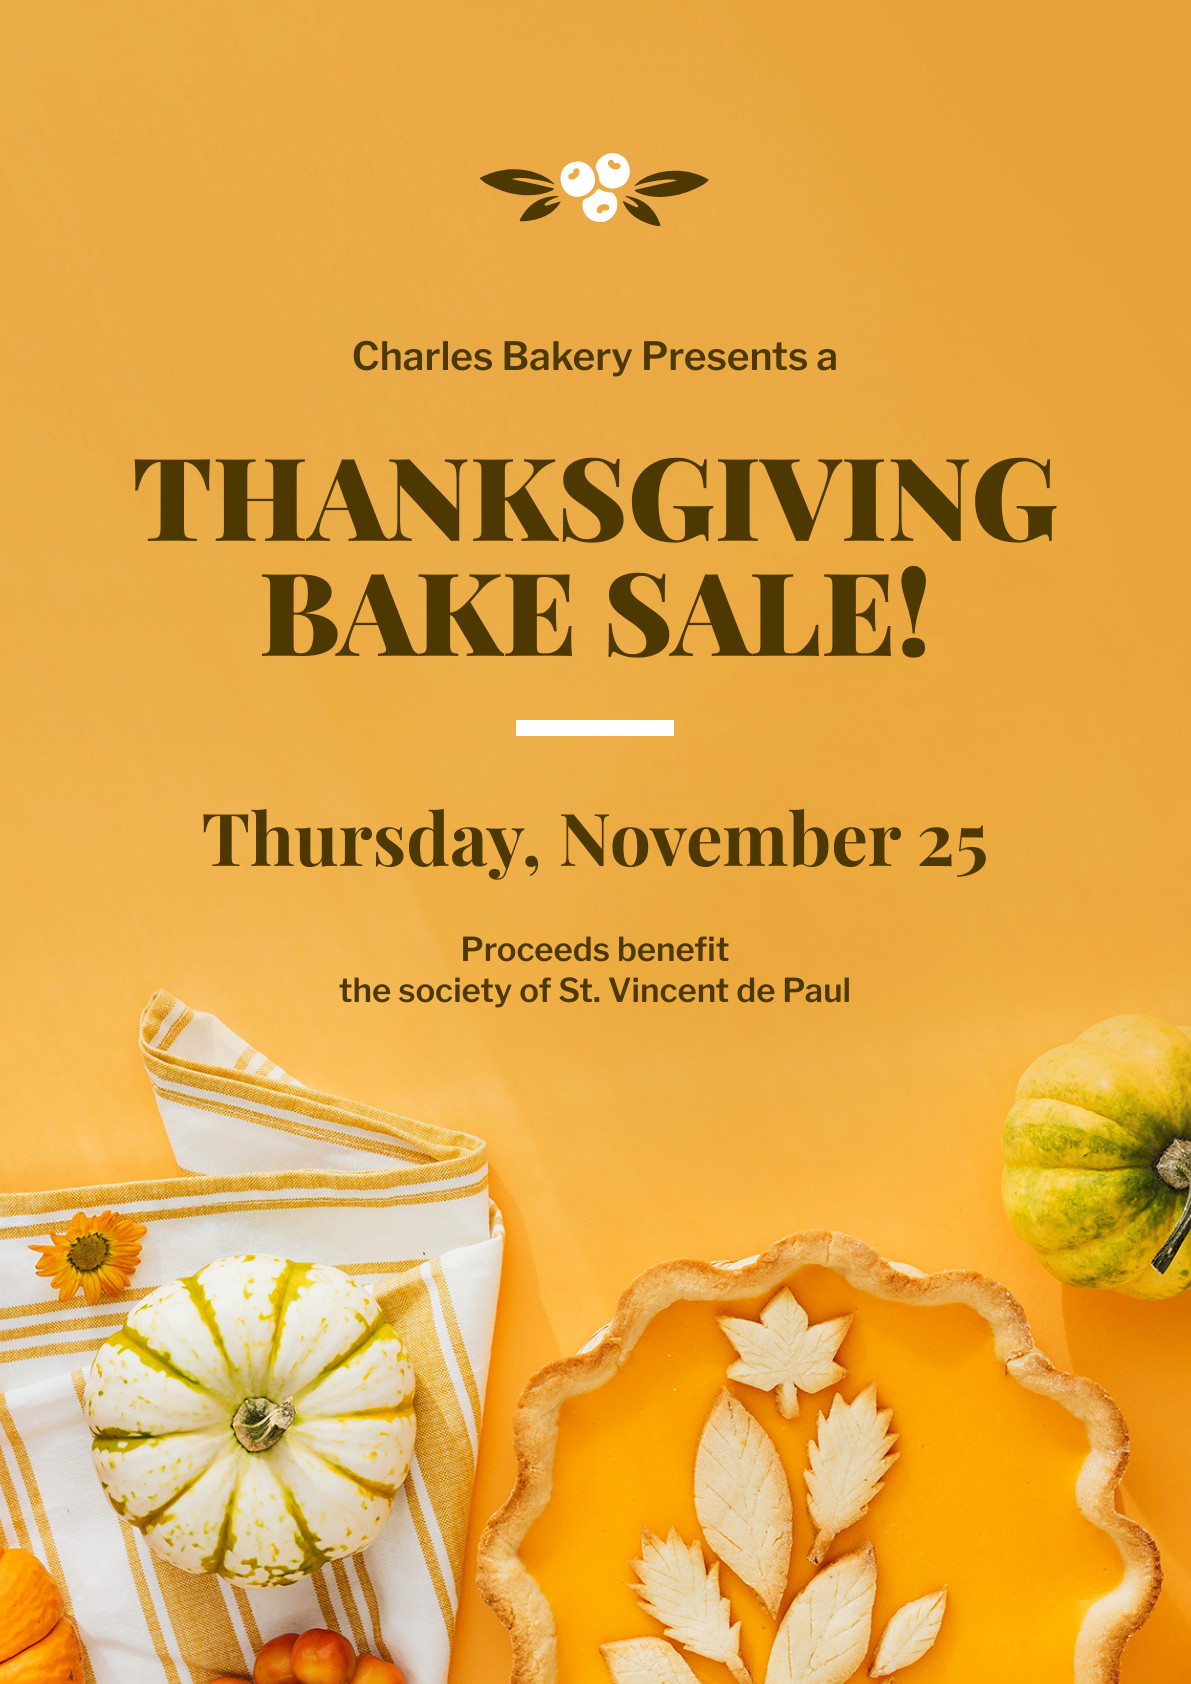 Thanksgiving Charles Bake Sale Poster